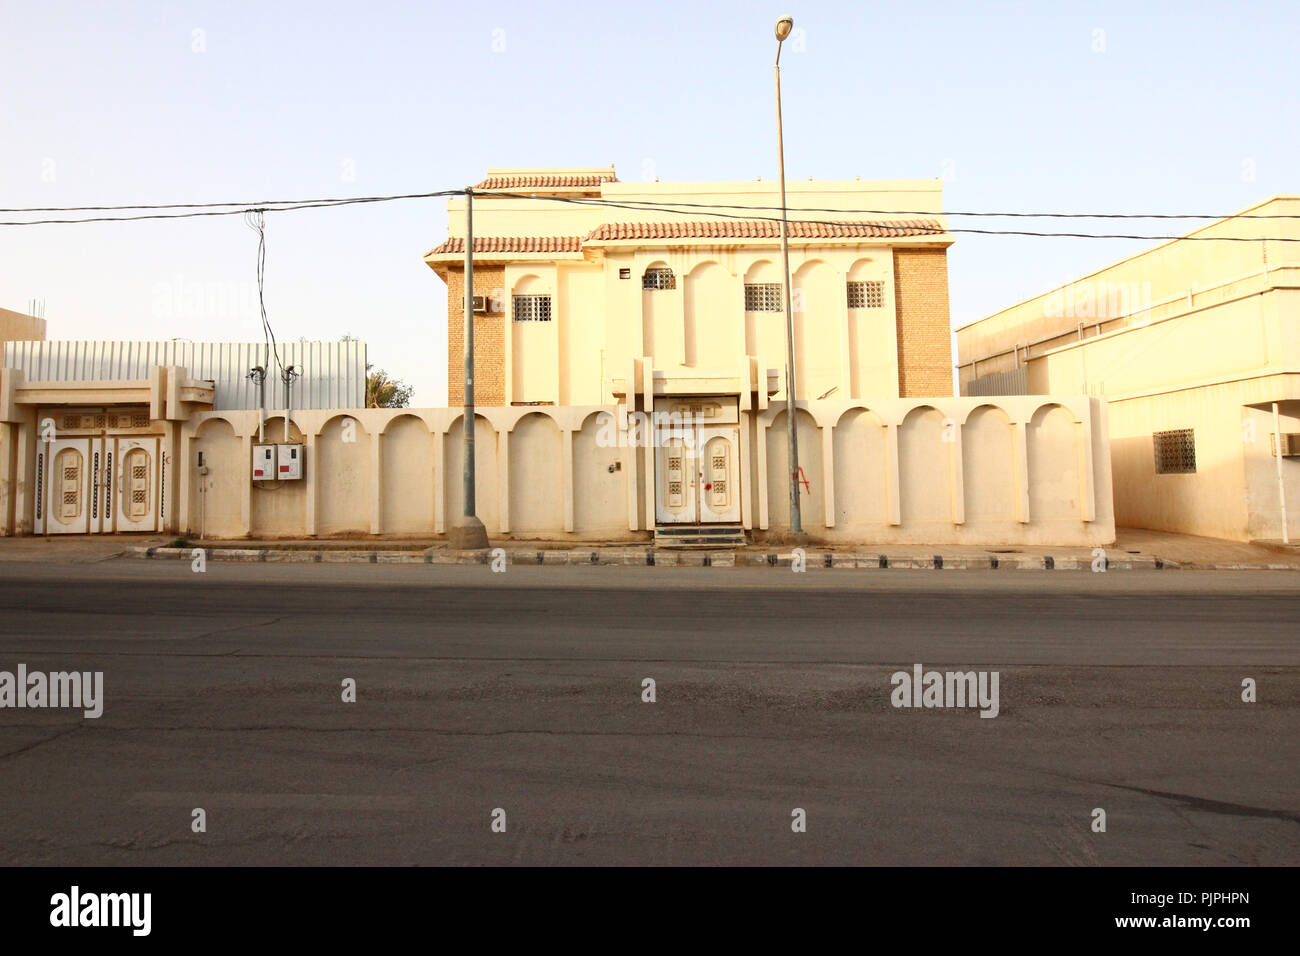 A Saudi Arabian home design Stock Photo